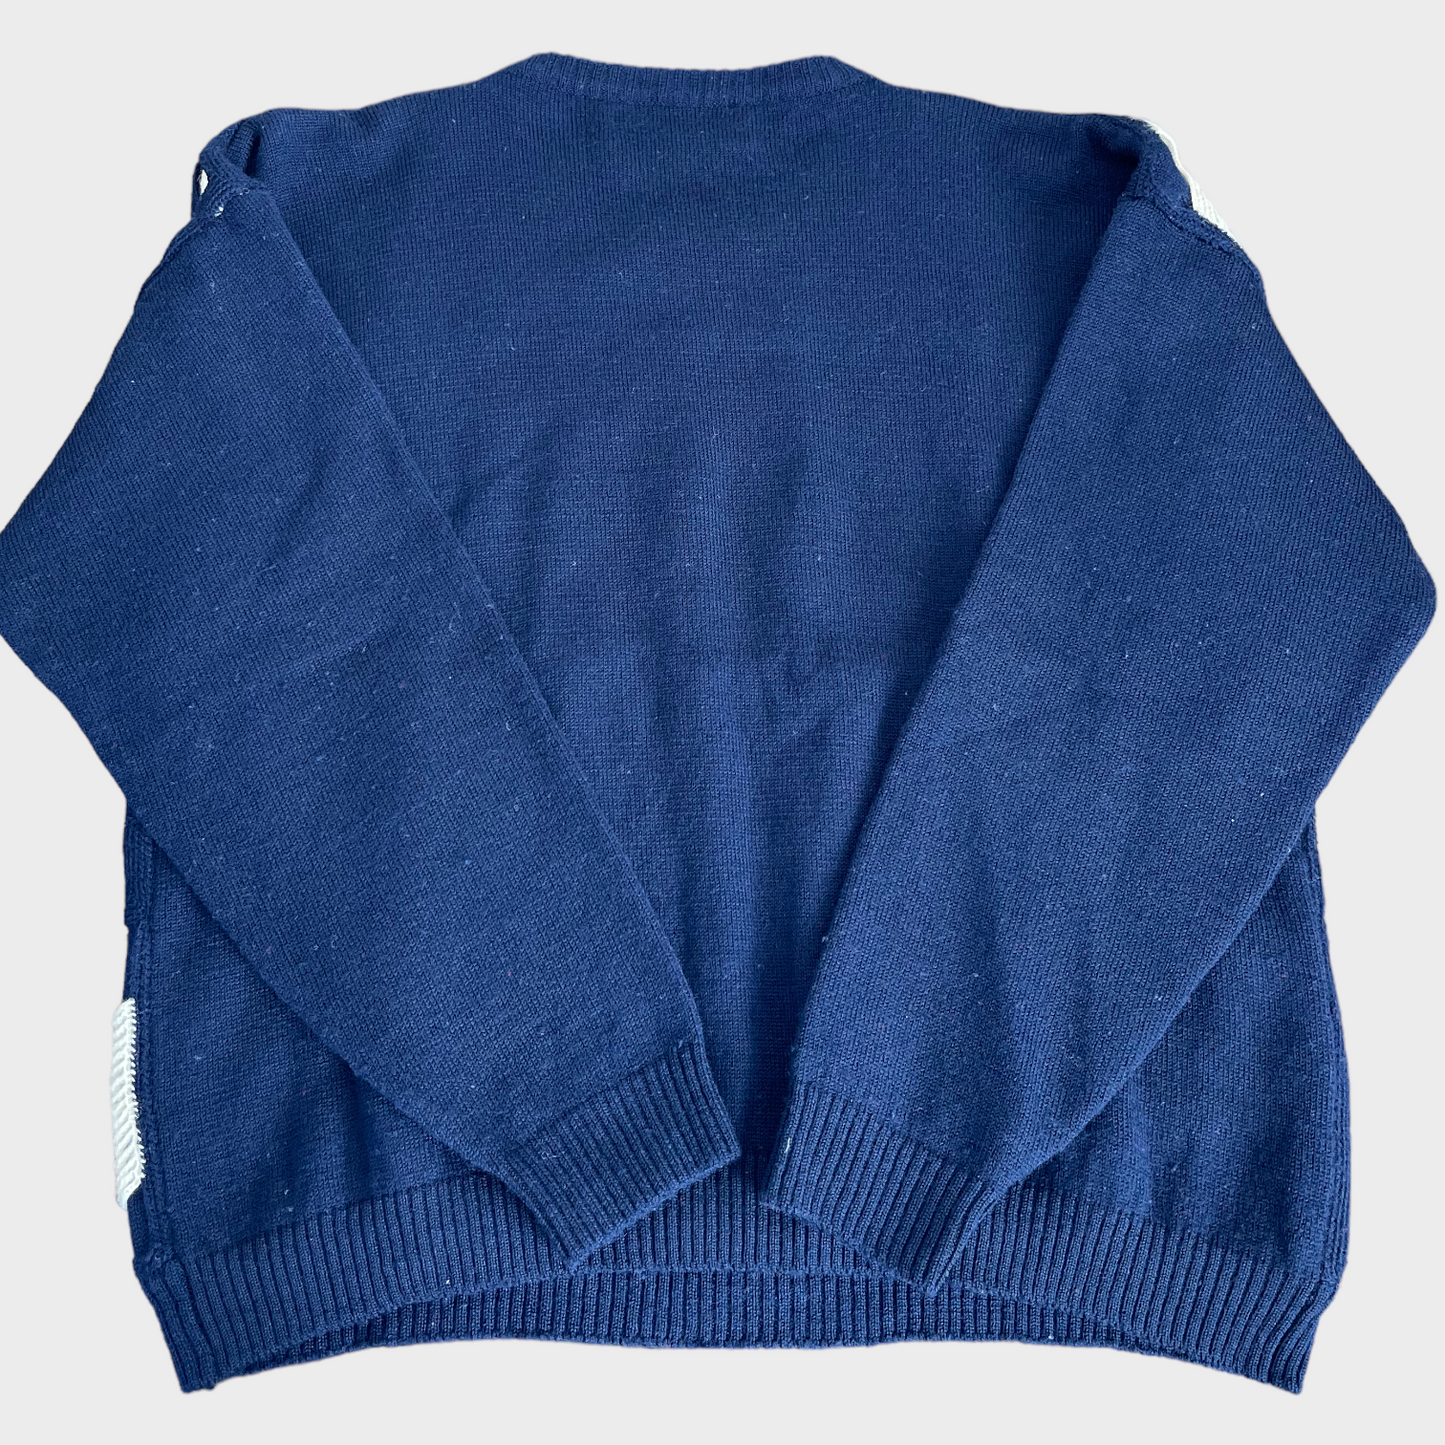 Vintage Gold Dream Wool Crewneck Sweater Knit Cut-Out Blue Beige Women's Size XS